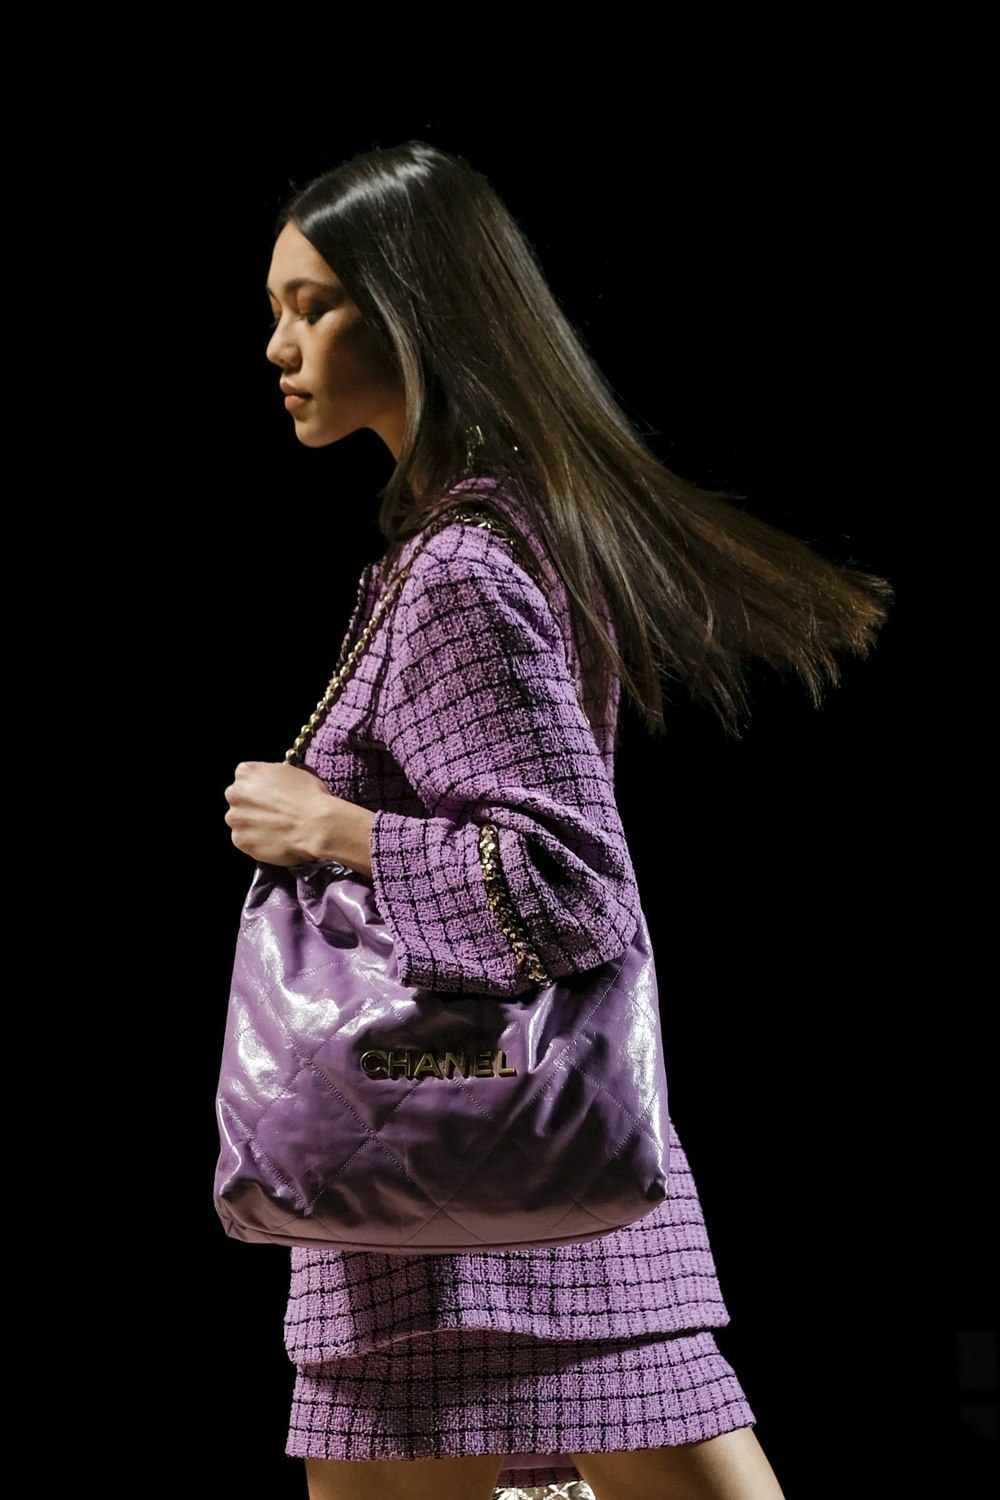 Chanel 22 bag: The Secret behind the FUTURE LEGEND